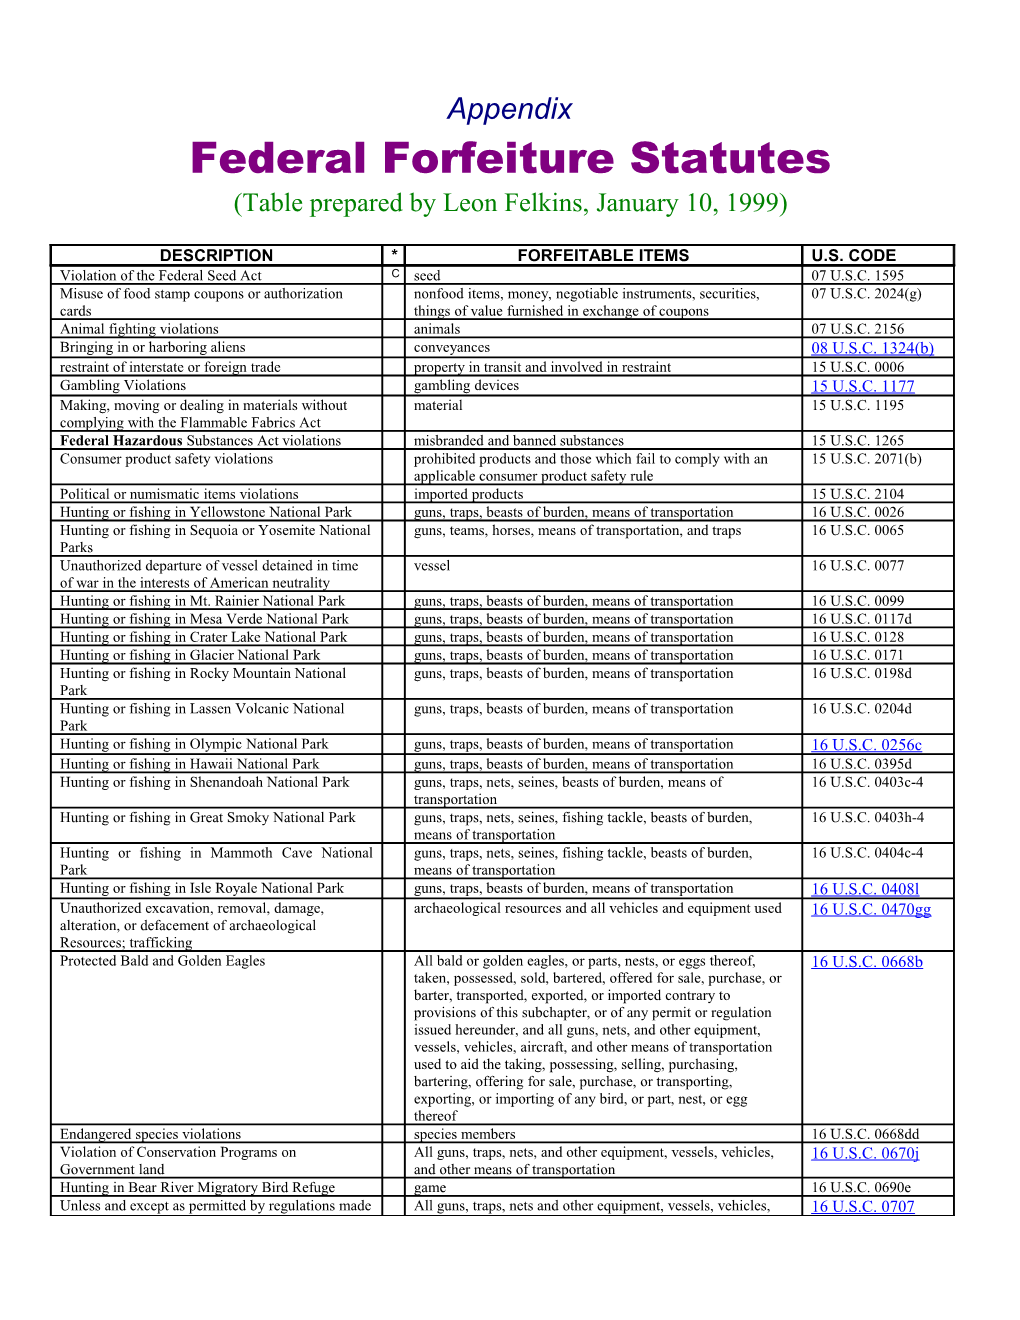 Federal Forfeiture Statutes 102